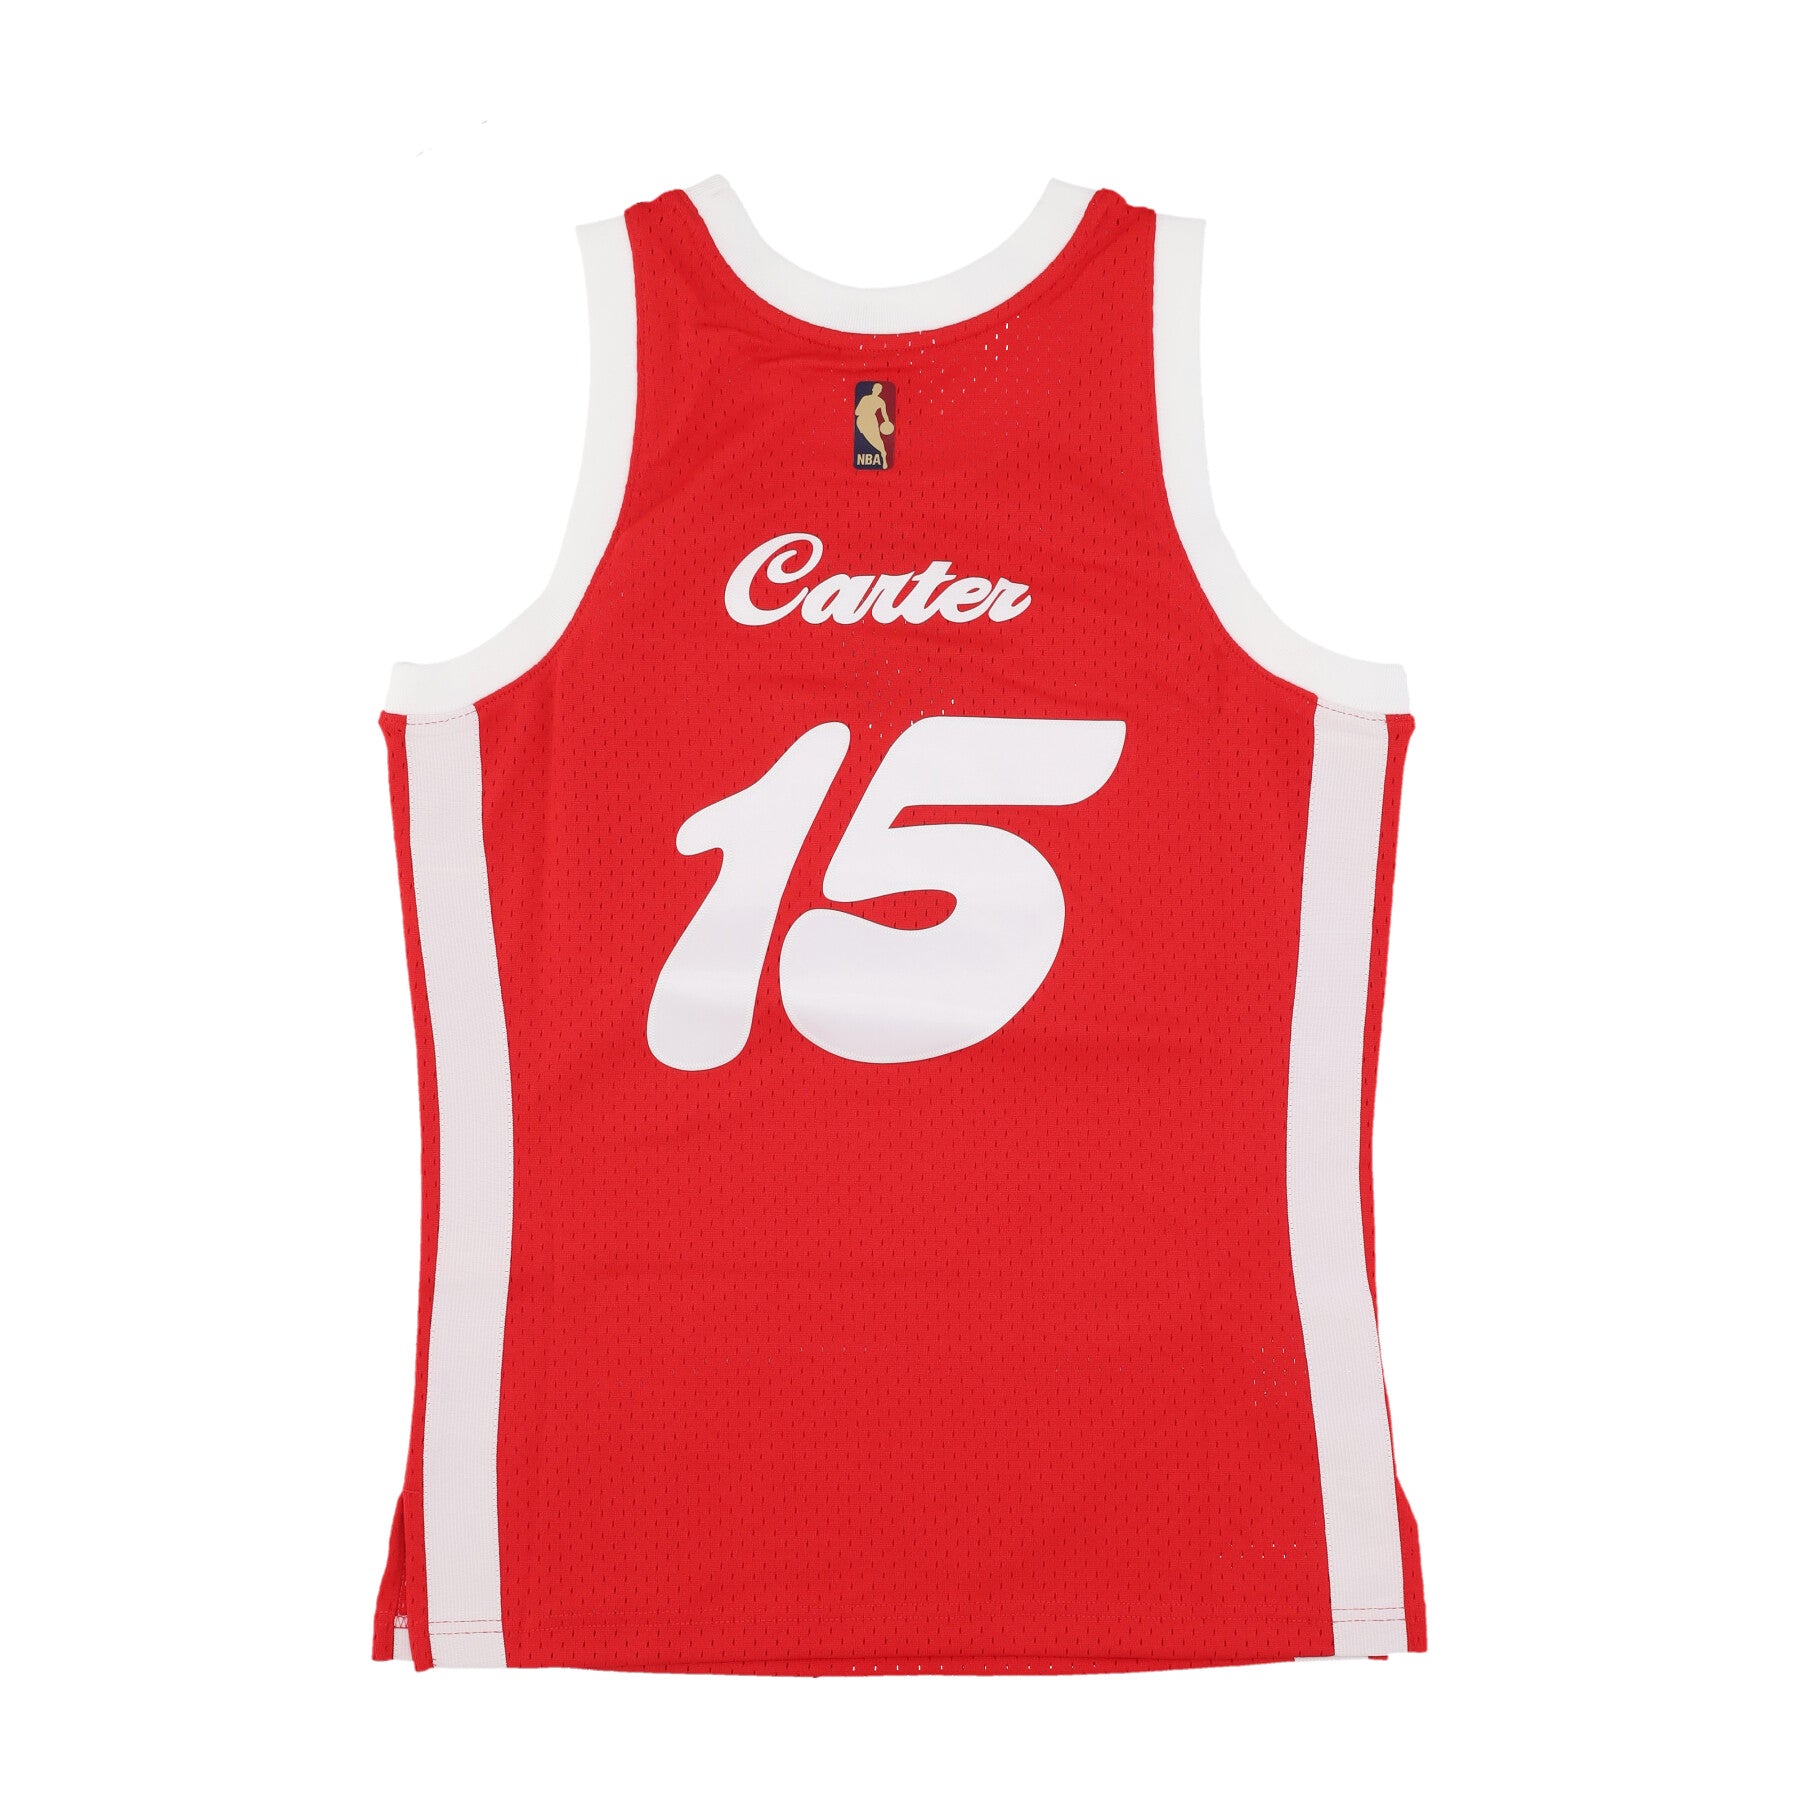 Canotta Basket Uomo Nba Hwc Jersey 2015 No 15 Vince Carter Memgri Red SMJY6143-MGR15VCARED1